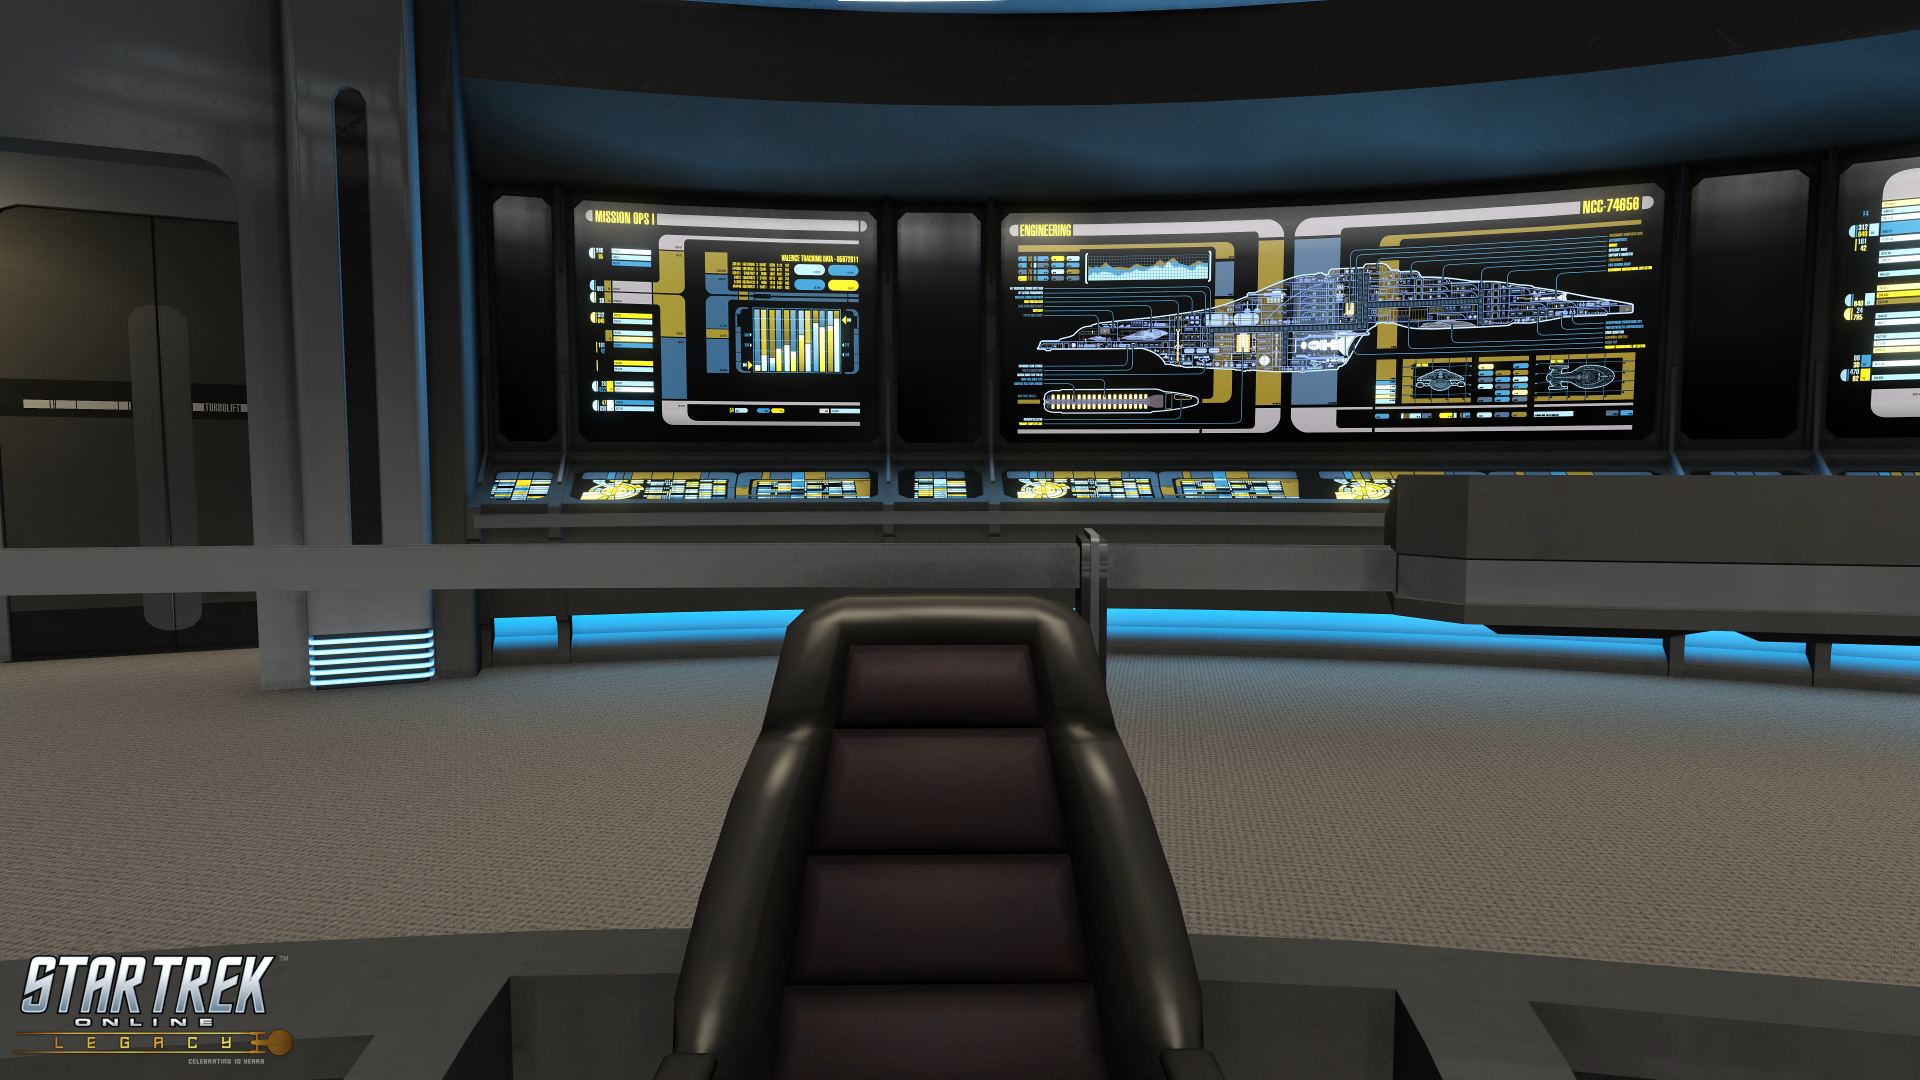 General 1920x1080 Star Trek Star Trek Online science fiction PC gaming